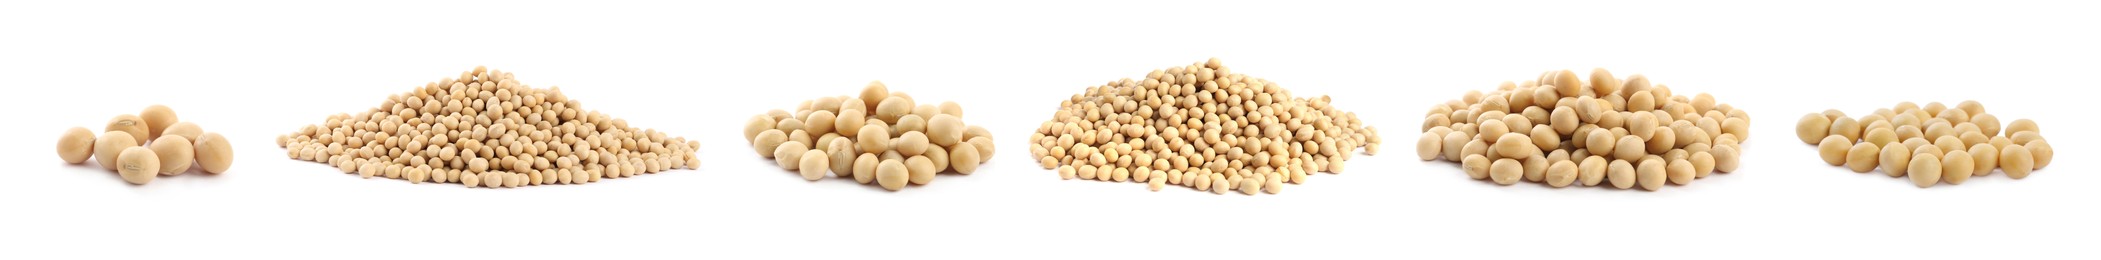 Set with soya beans on white background. Banner design 